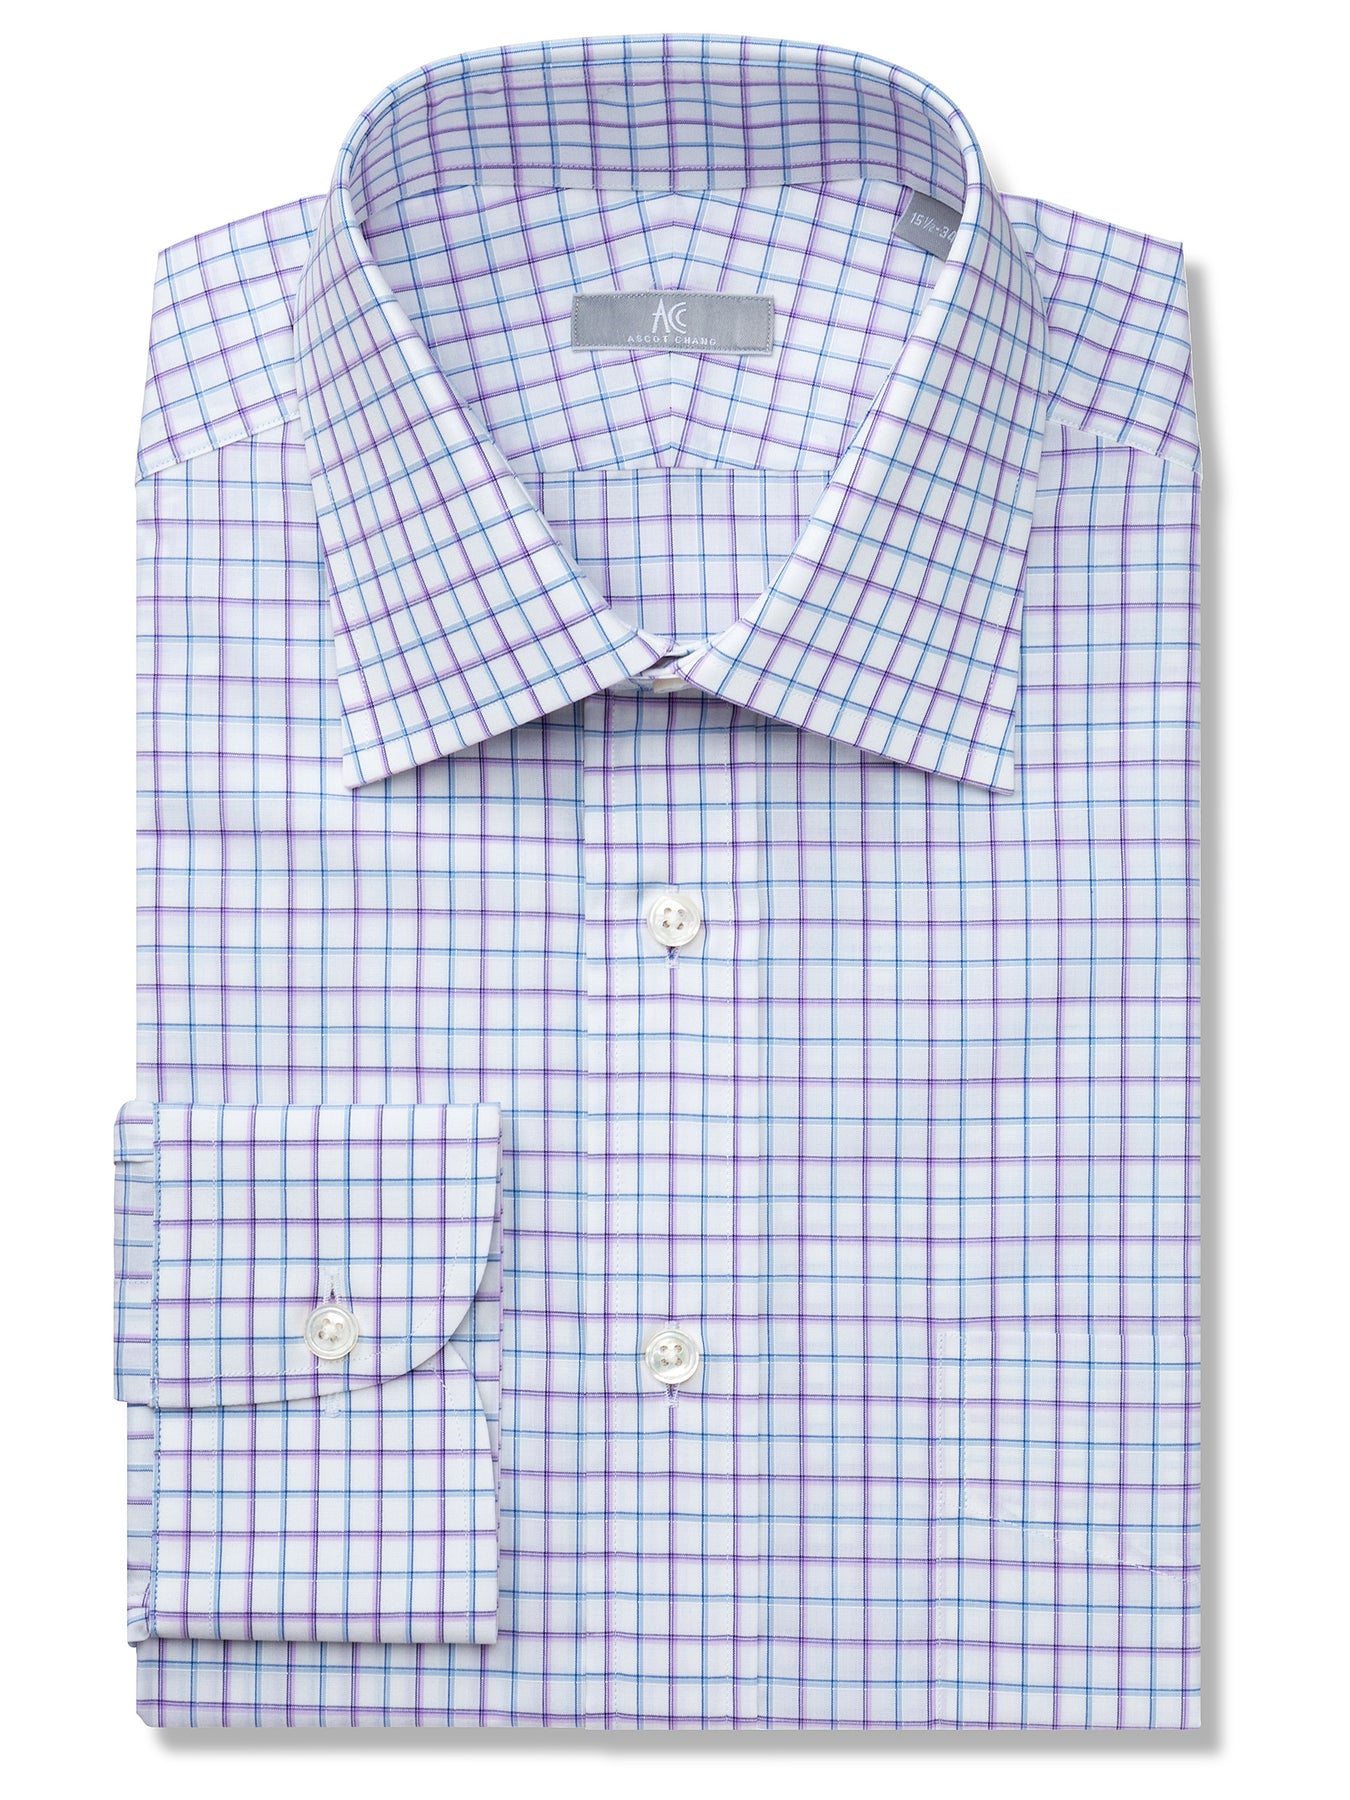 Blue And Purple Tattersall Check Shirt - Elgin Fit (SLIM) | Ascot Chang